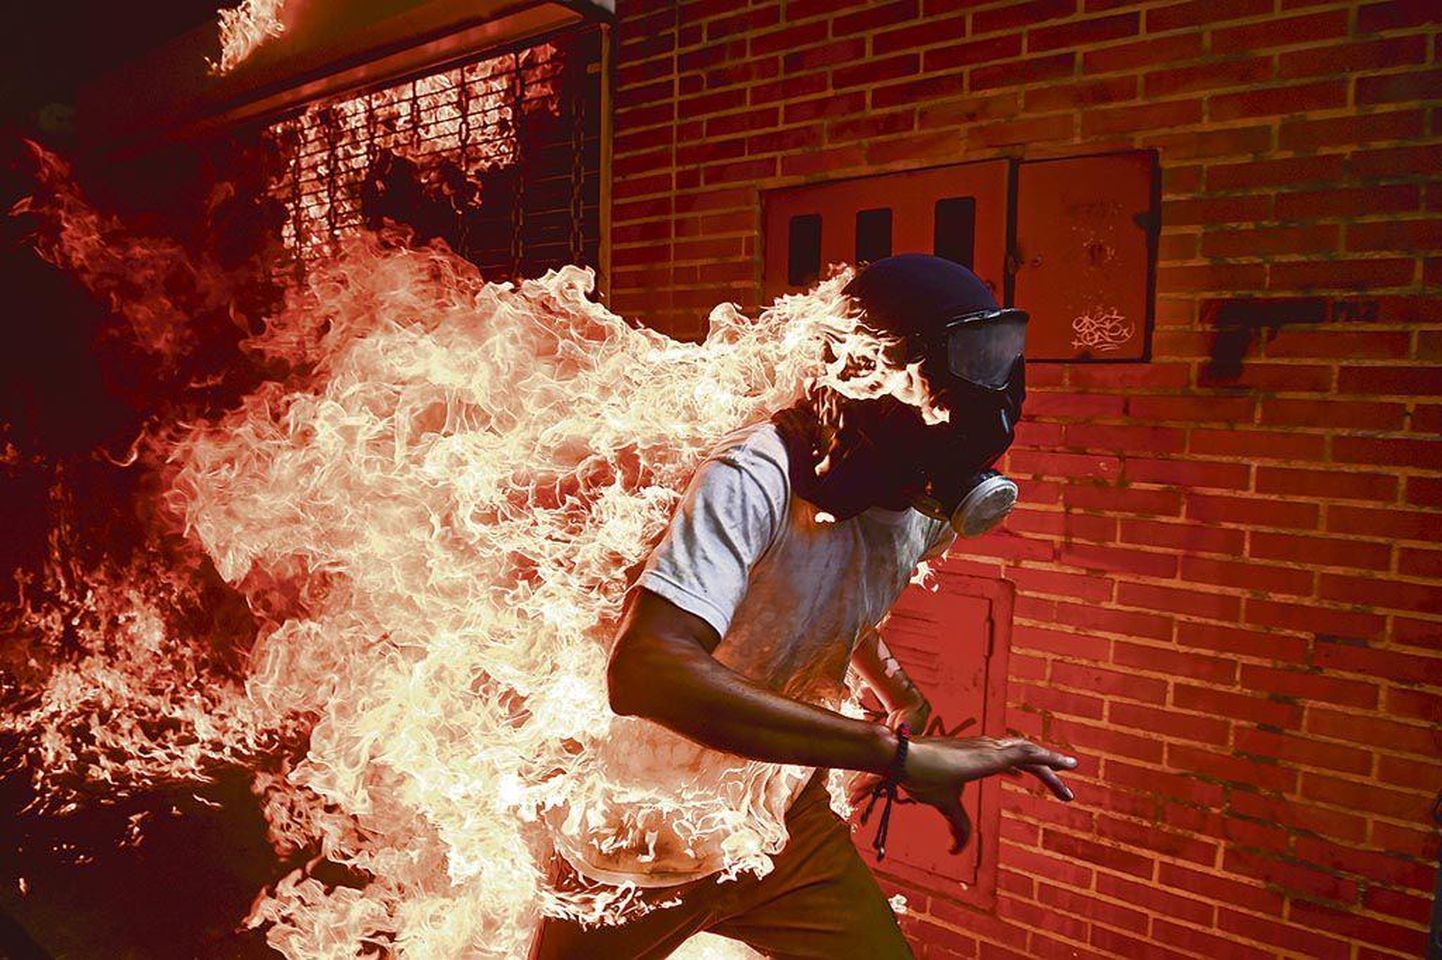 2018. aasta parima pressifoto tegi Ronaldo Schemidt. Pildil José Víctor Salazar Balzat, kes süttis põlema meeleavalduste käigus.